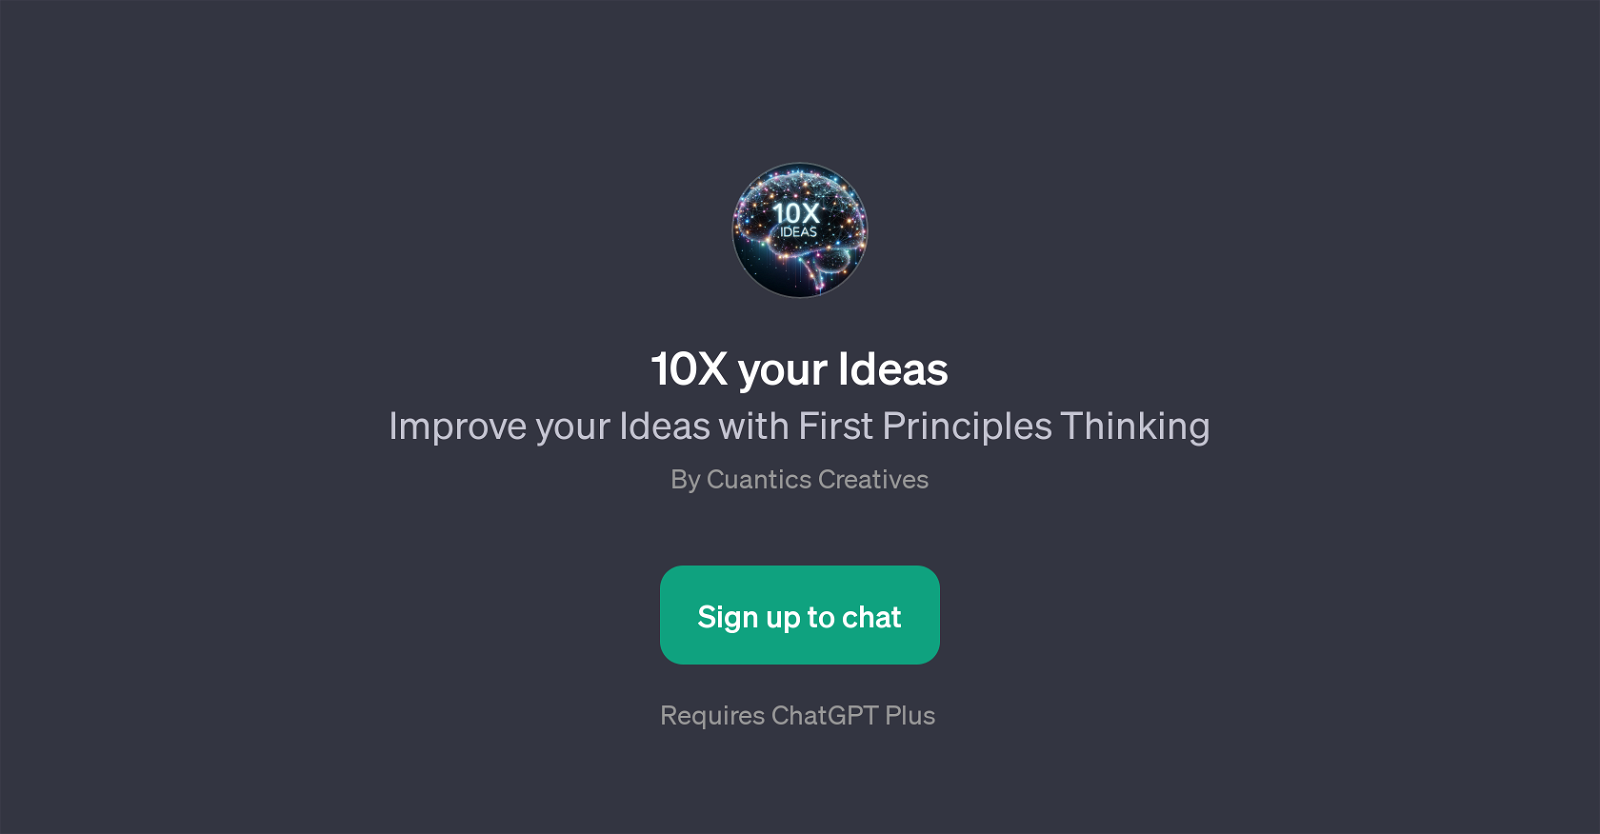 10X your Ideas website